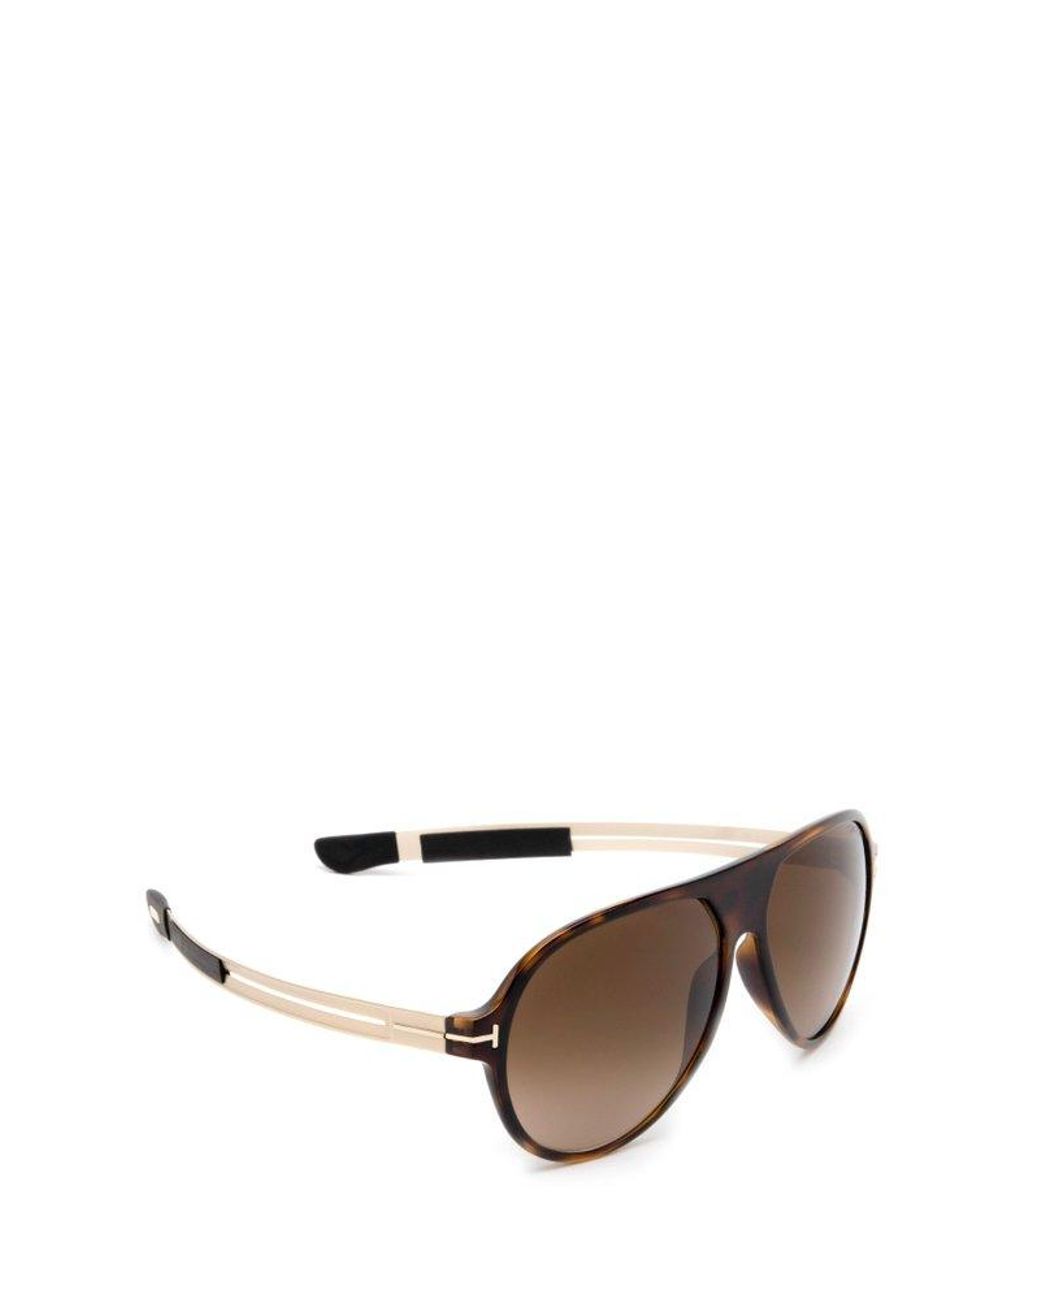 Tom Ford Oscar Aviator Frame Sunglasses for Men - Save 2% | Lyst